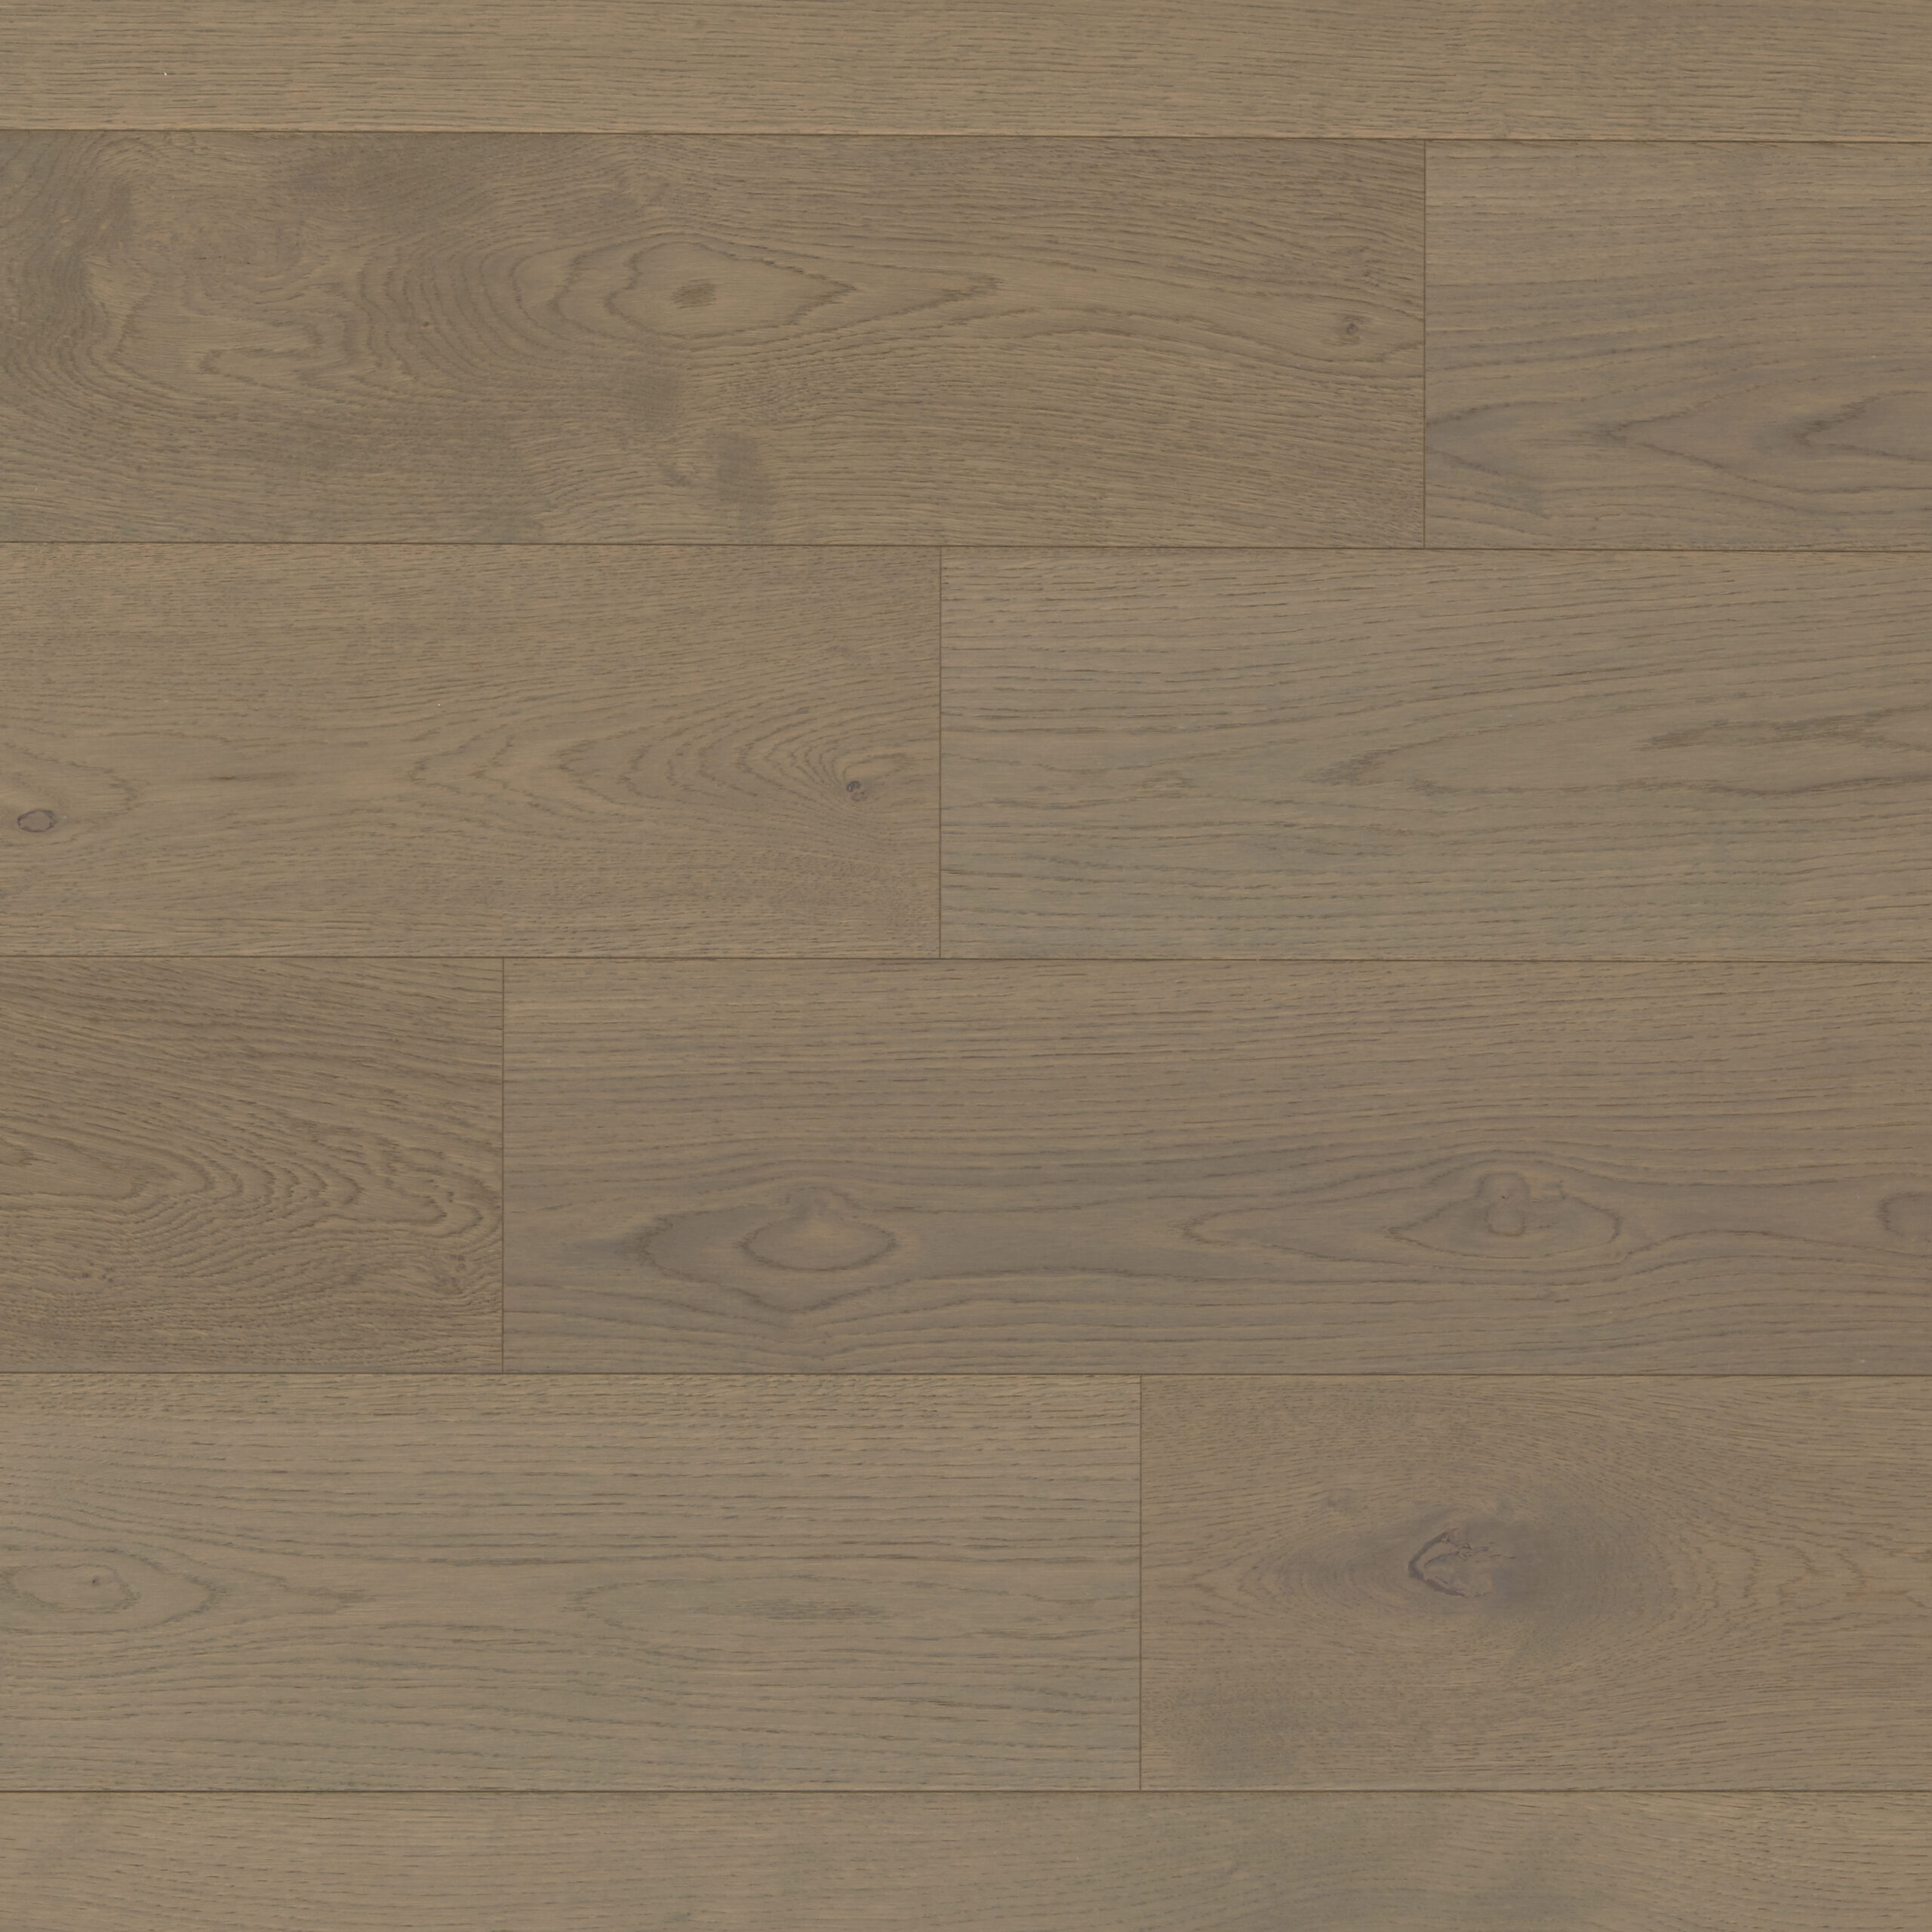 Furlong Flooring: Majestic 189 Clic (9910) – Light Grey Brushed & Matt Lacquered (14/3 x 189mm)